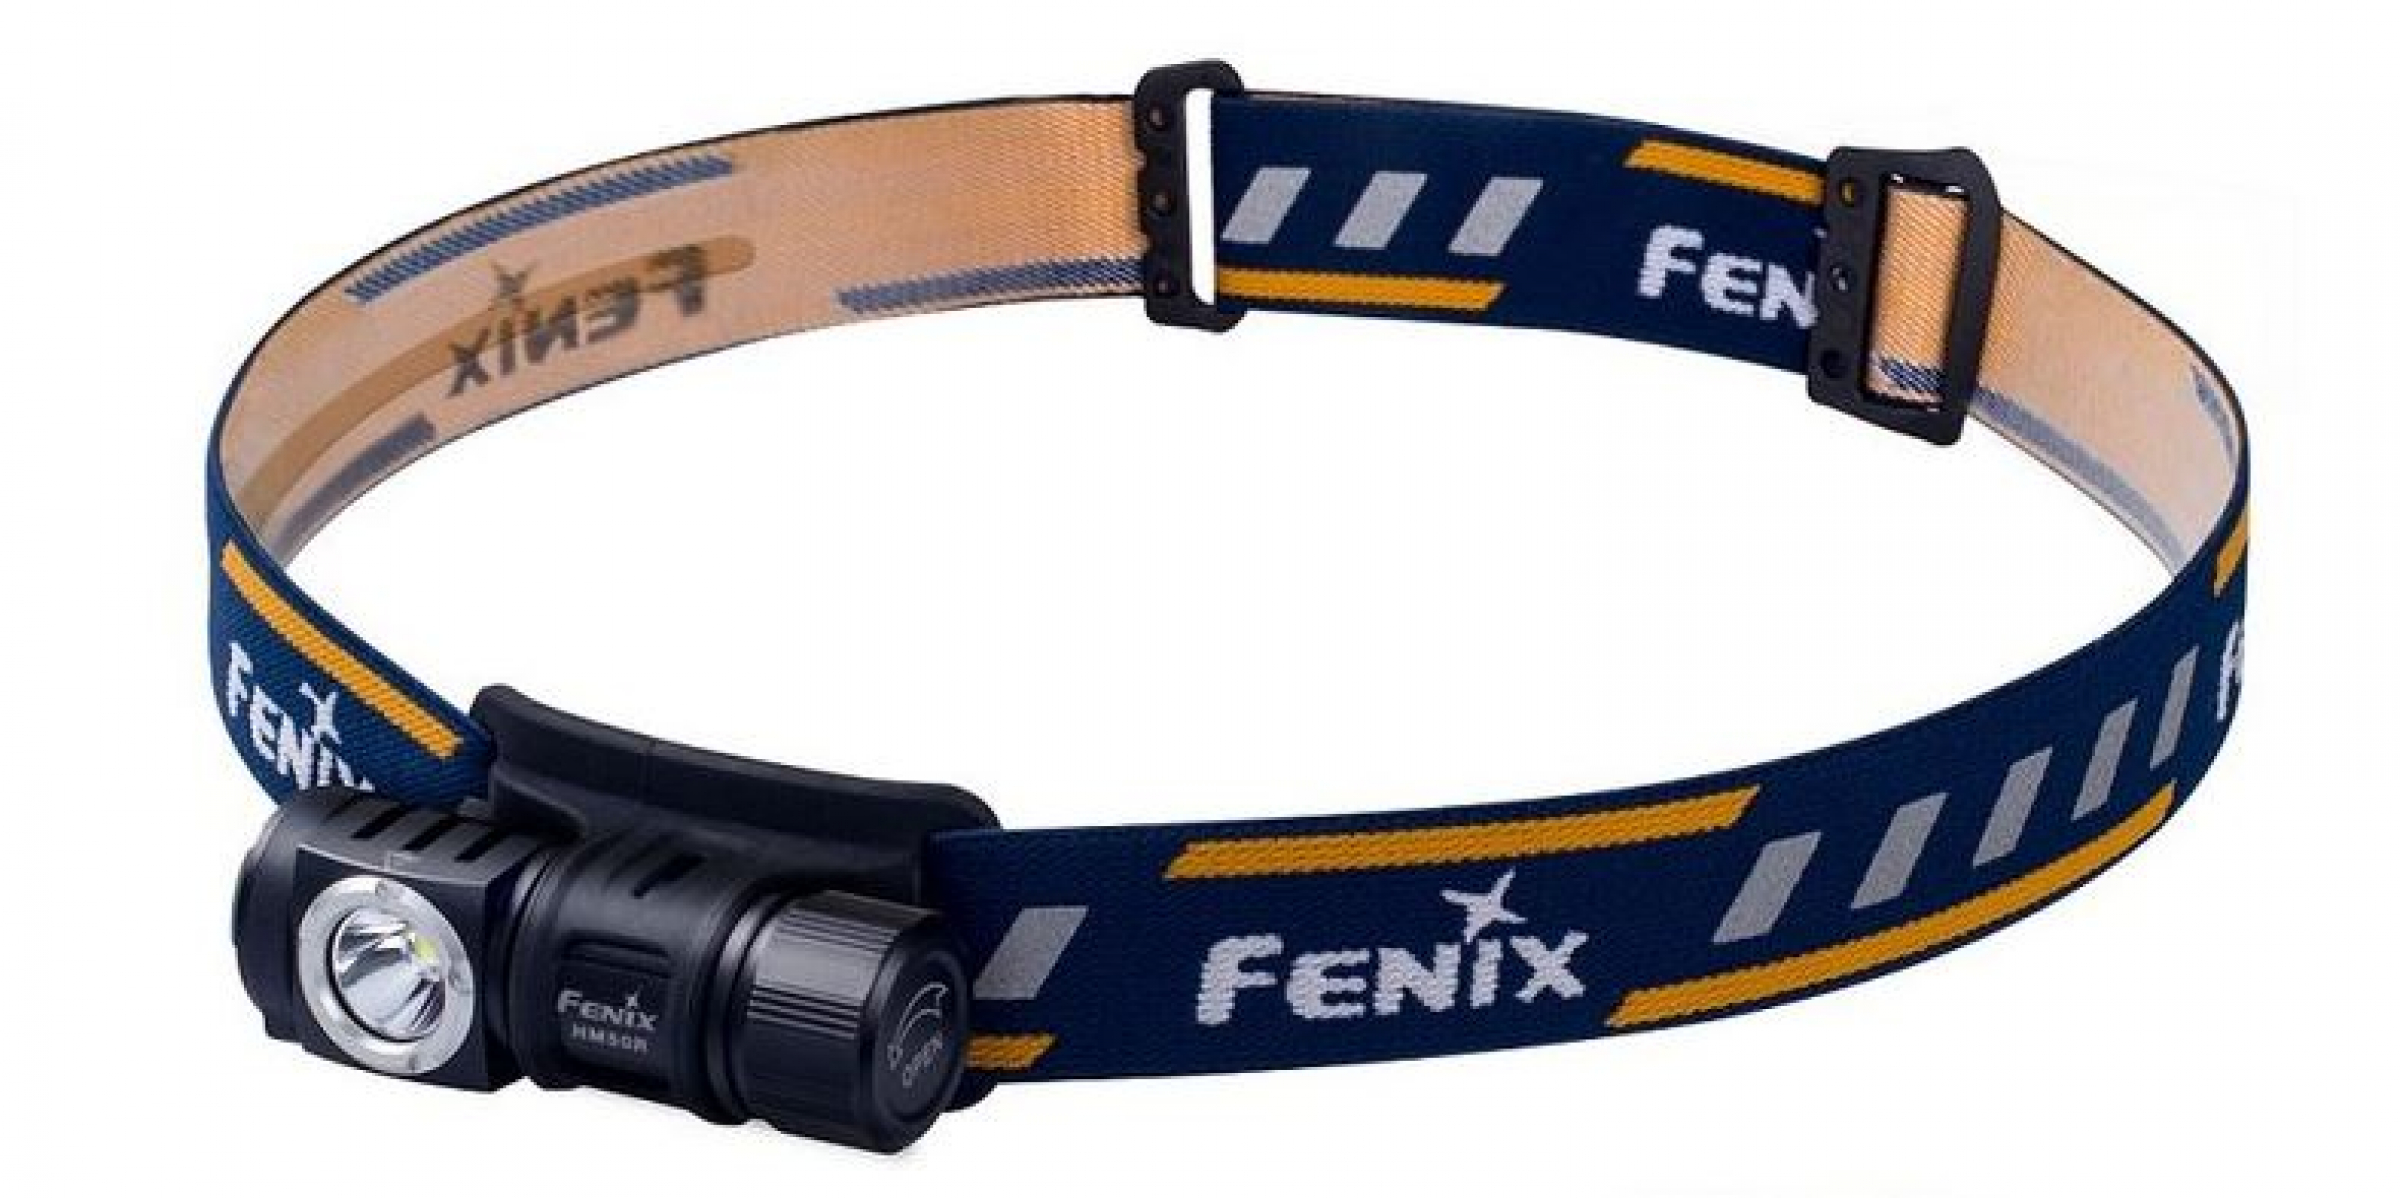 Fenix Headlamp HM50R LED Stirnlampe Cree XM-L2 U2 weiße LED inkl. 1x Akku